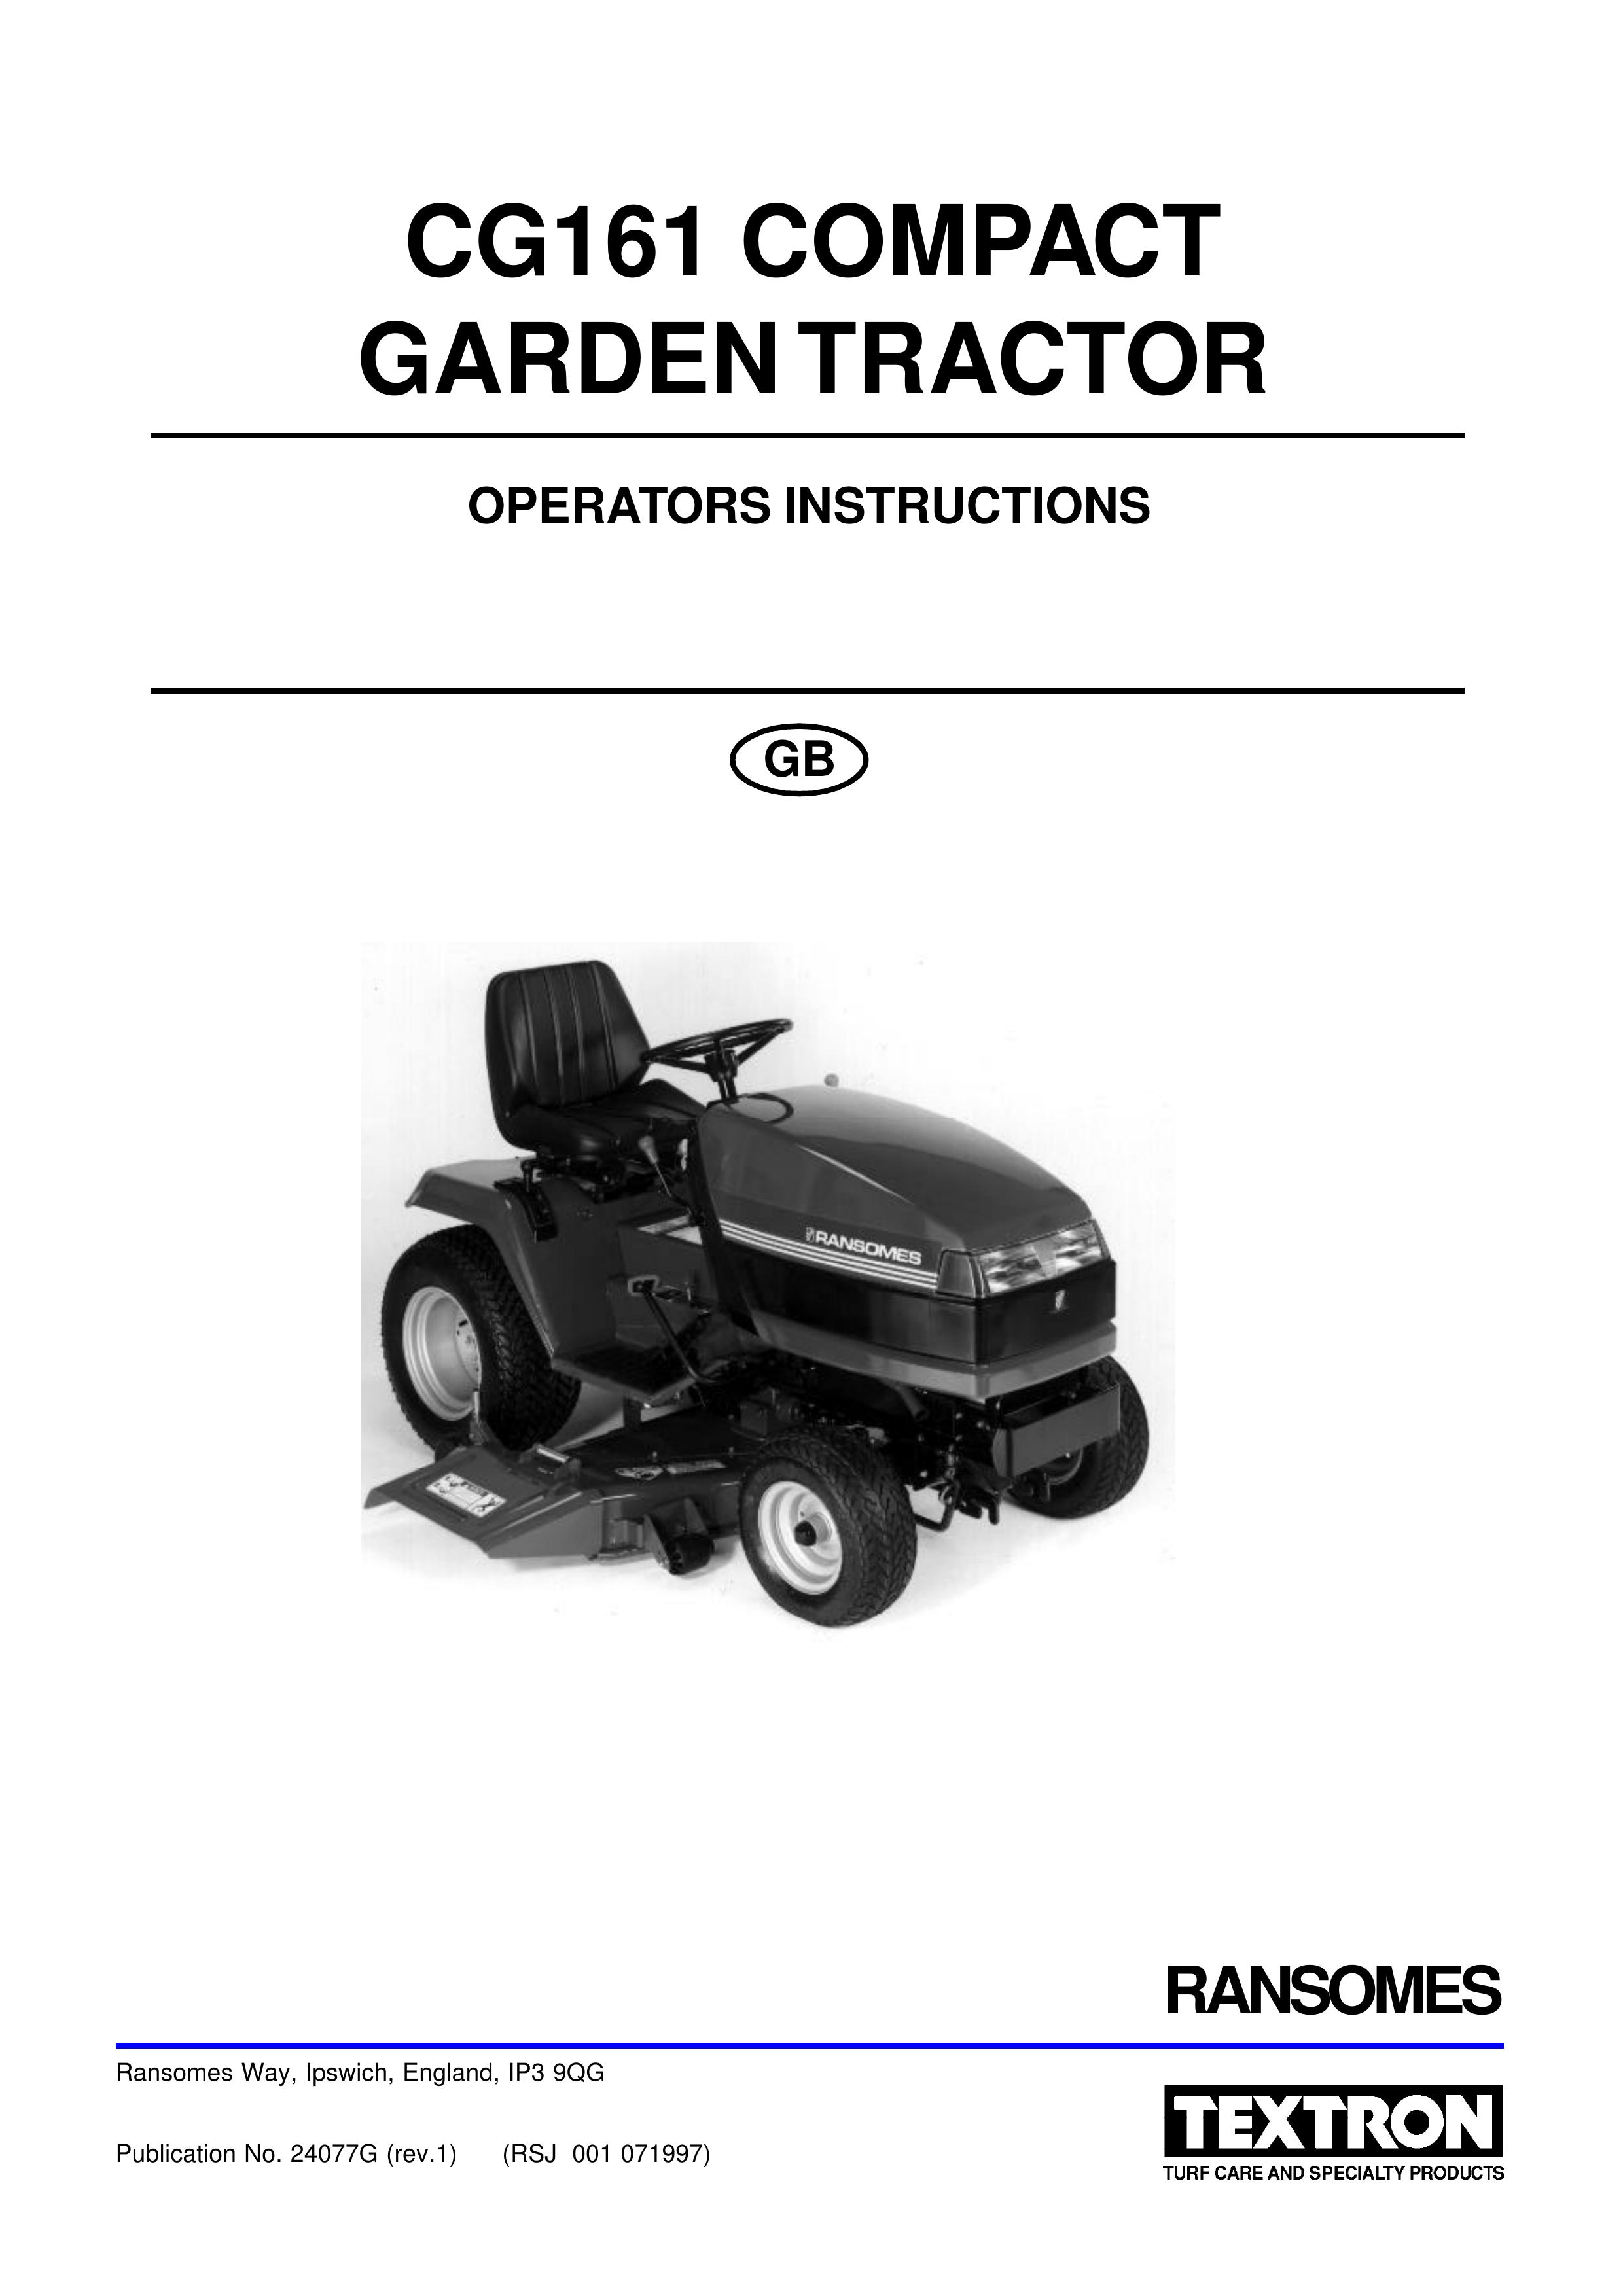 Shibaura CG161 Lawn Mower User Manual